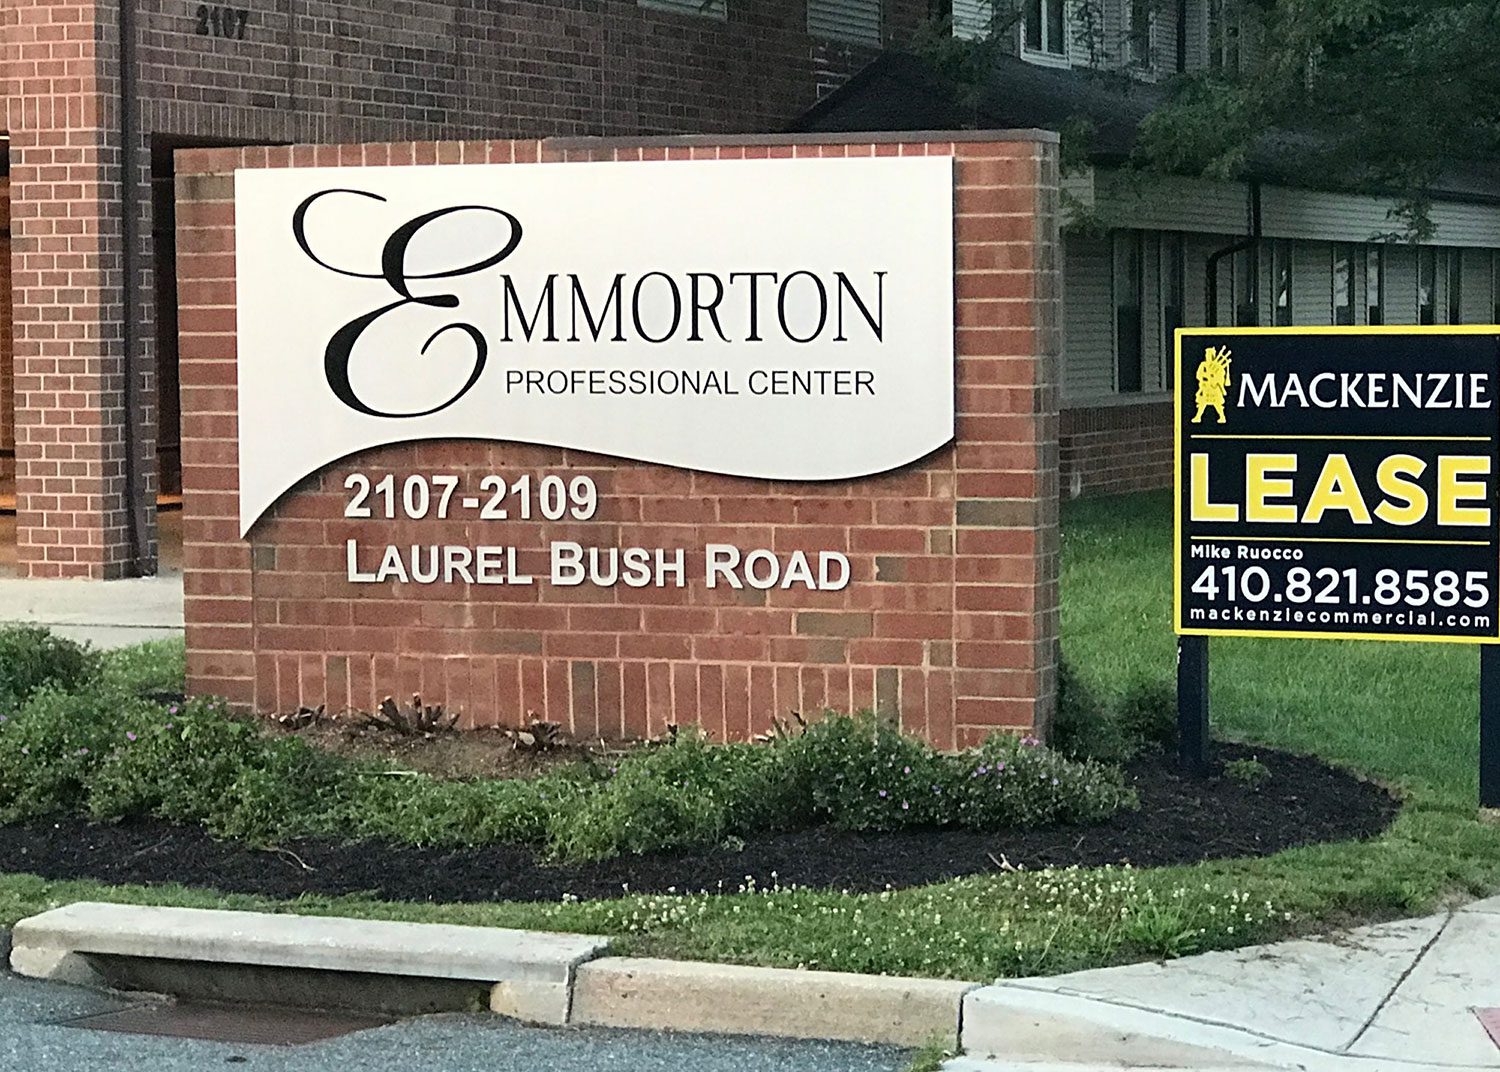 Emmorton Professional Center signage